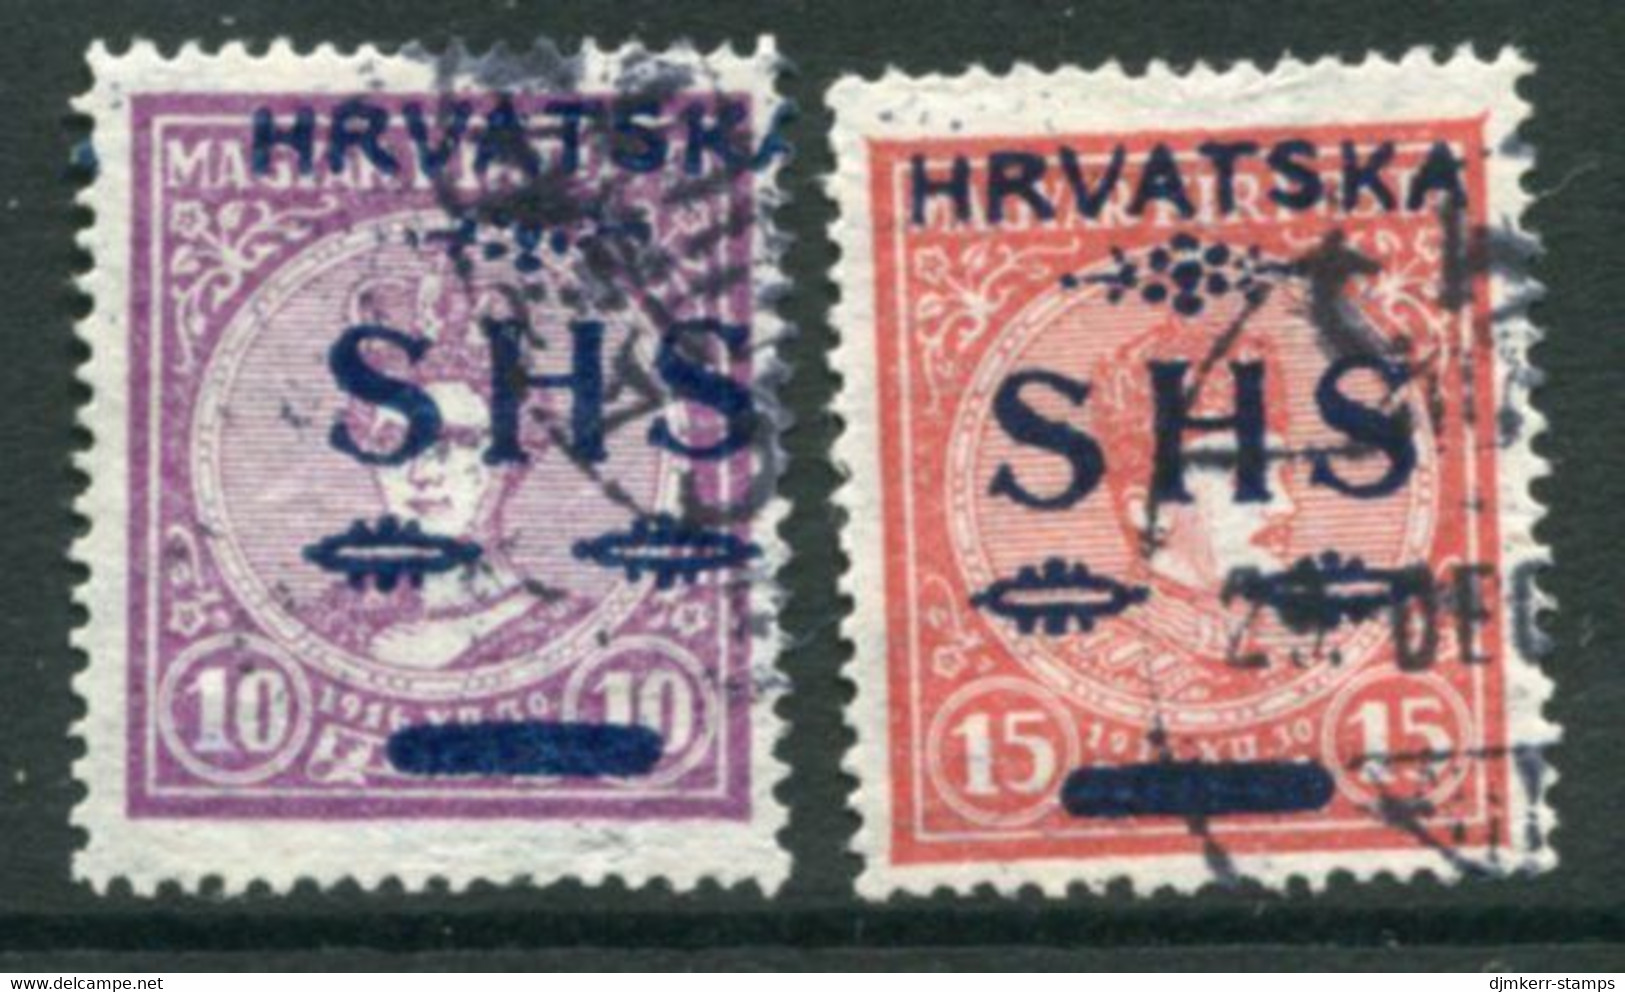 YUGOSLAVIA 1918 SHS Hrvatska Overprint On Hungary  Coronation Set Of 2 Used.   Michel 64-65 - Usati